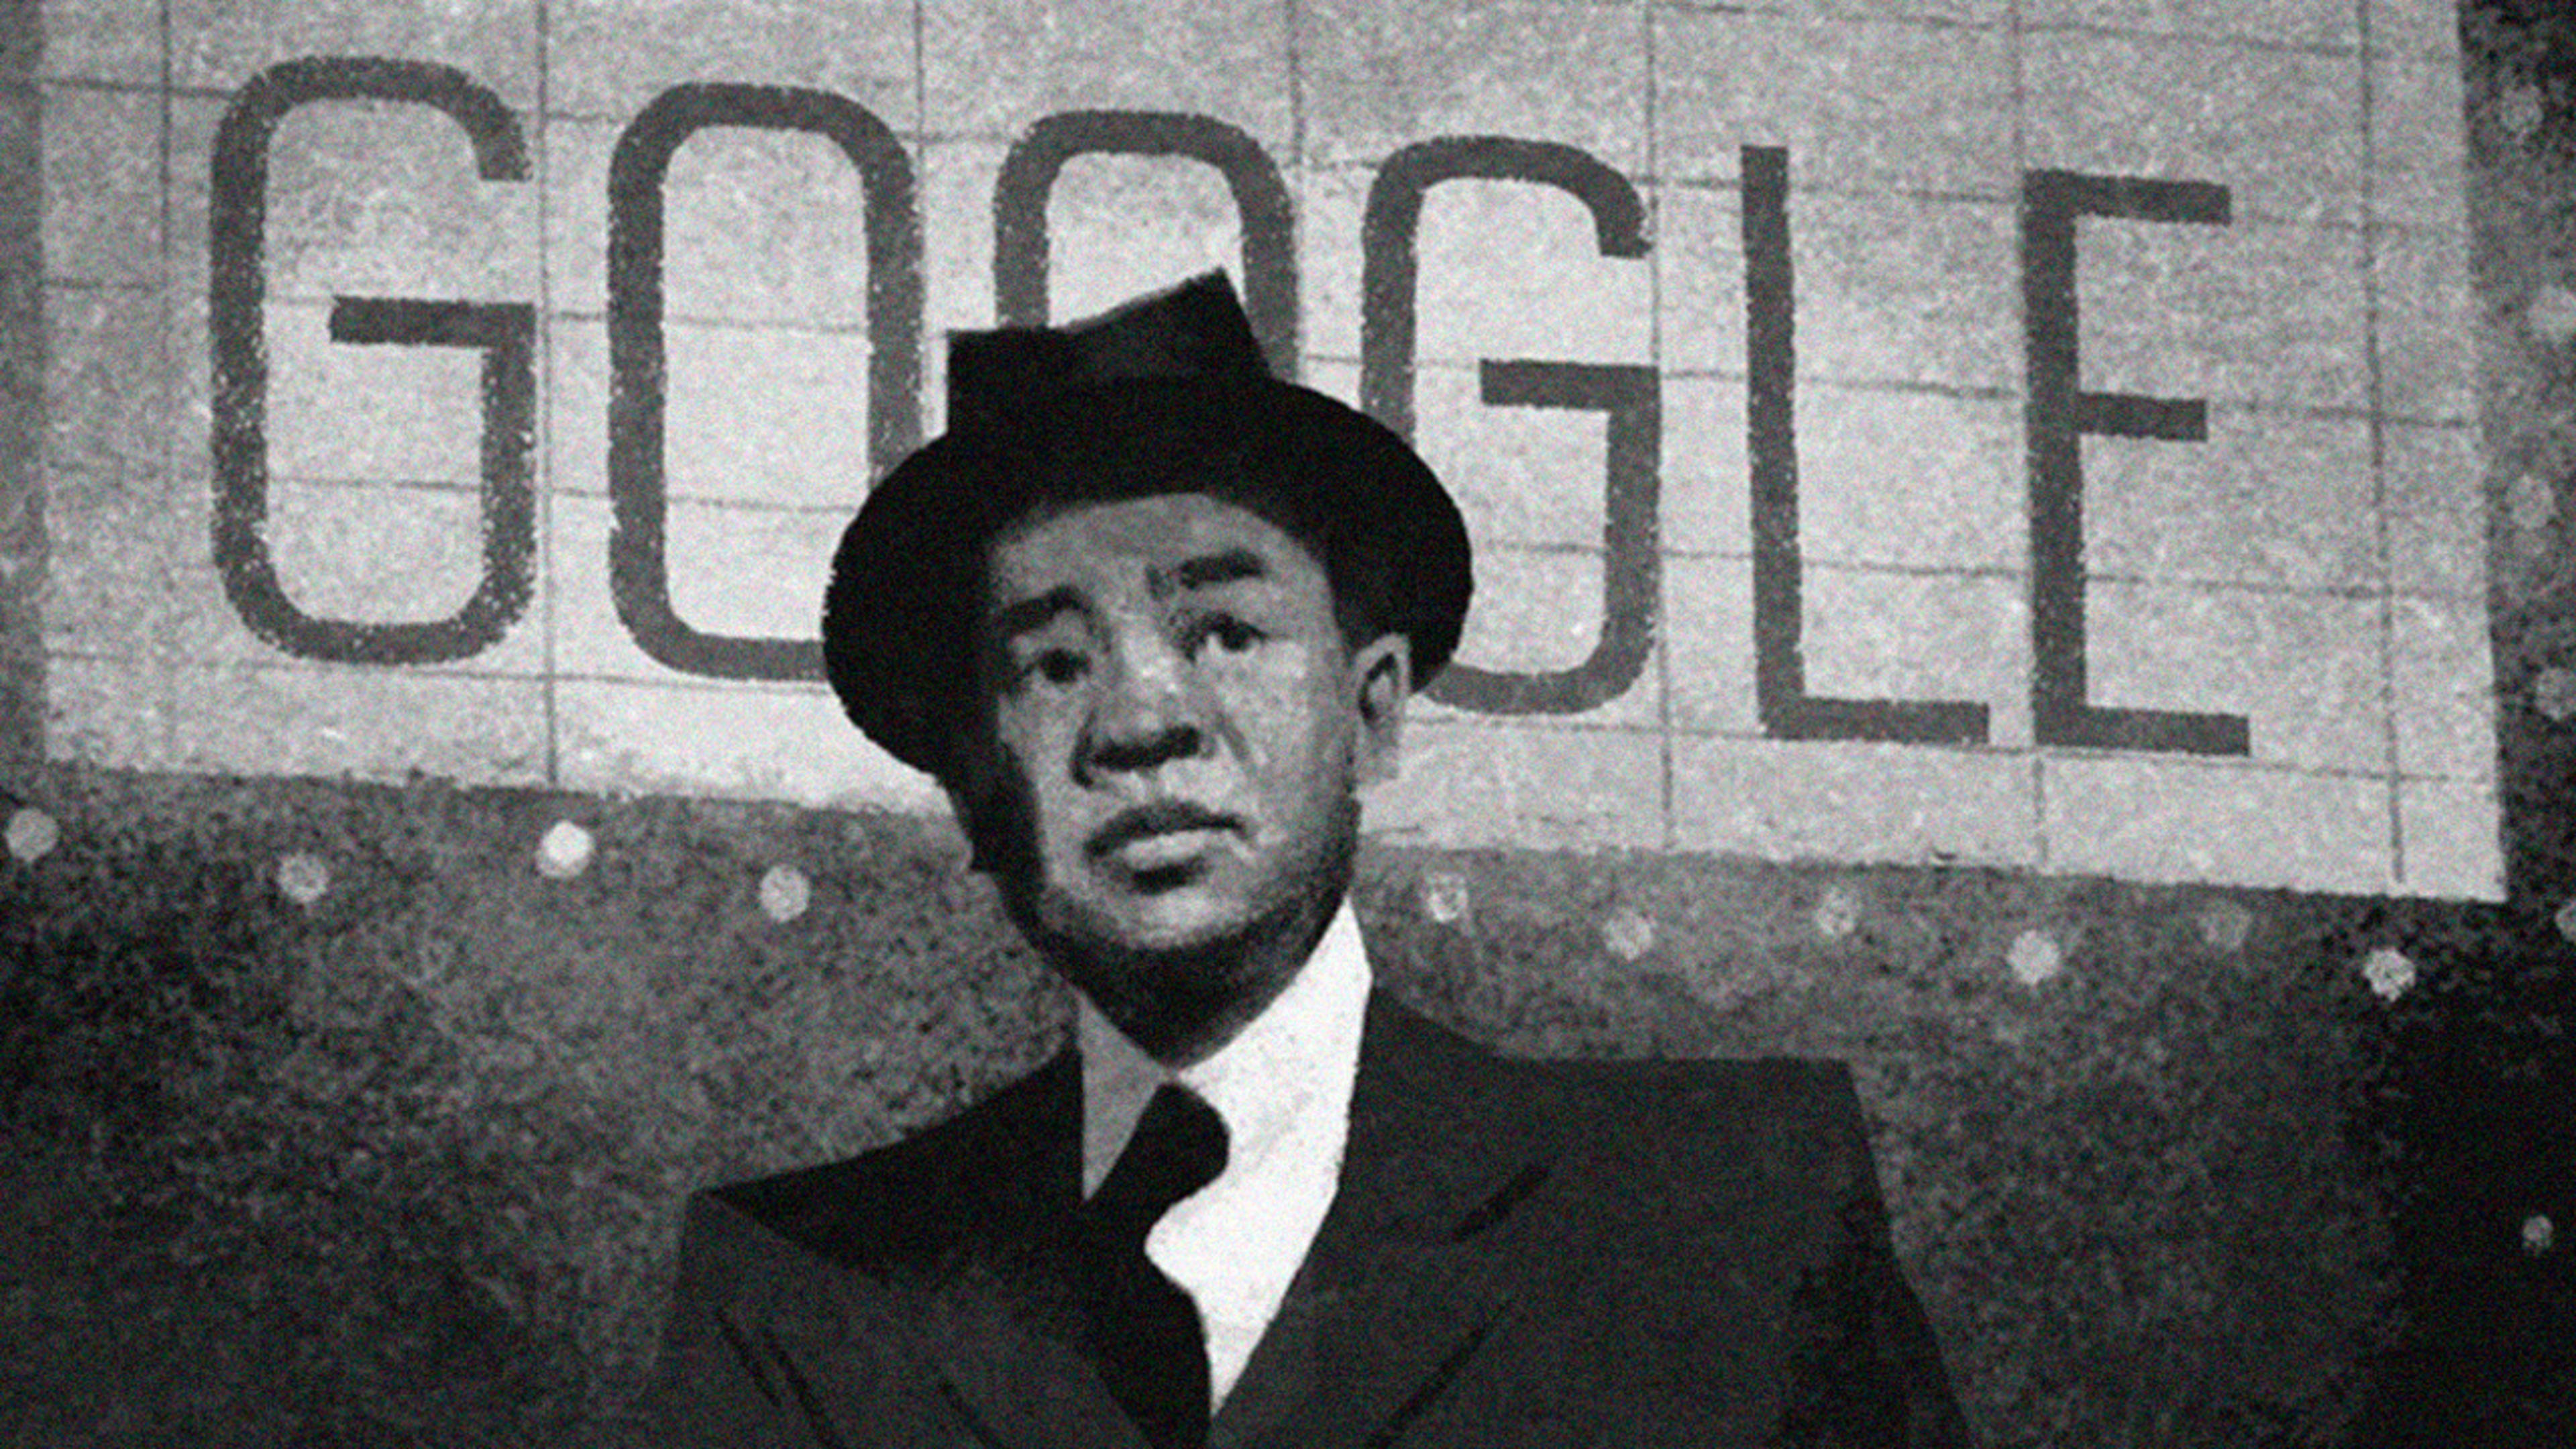 Google Doodle shines spotlight on cinematographer James Wong Howe